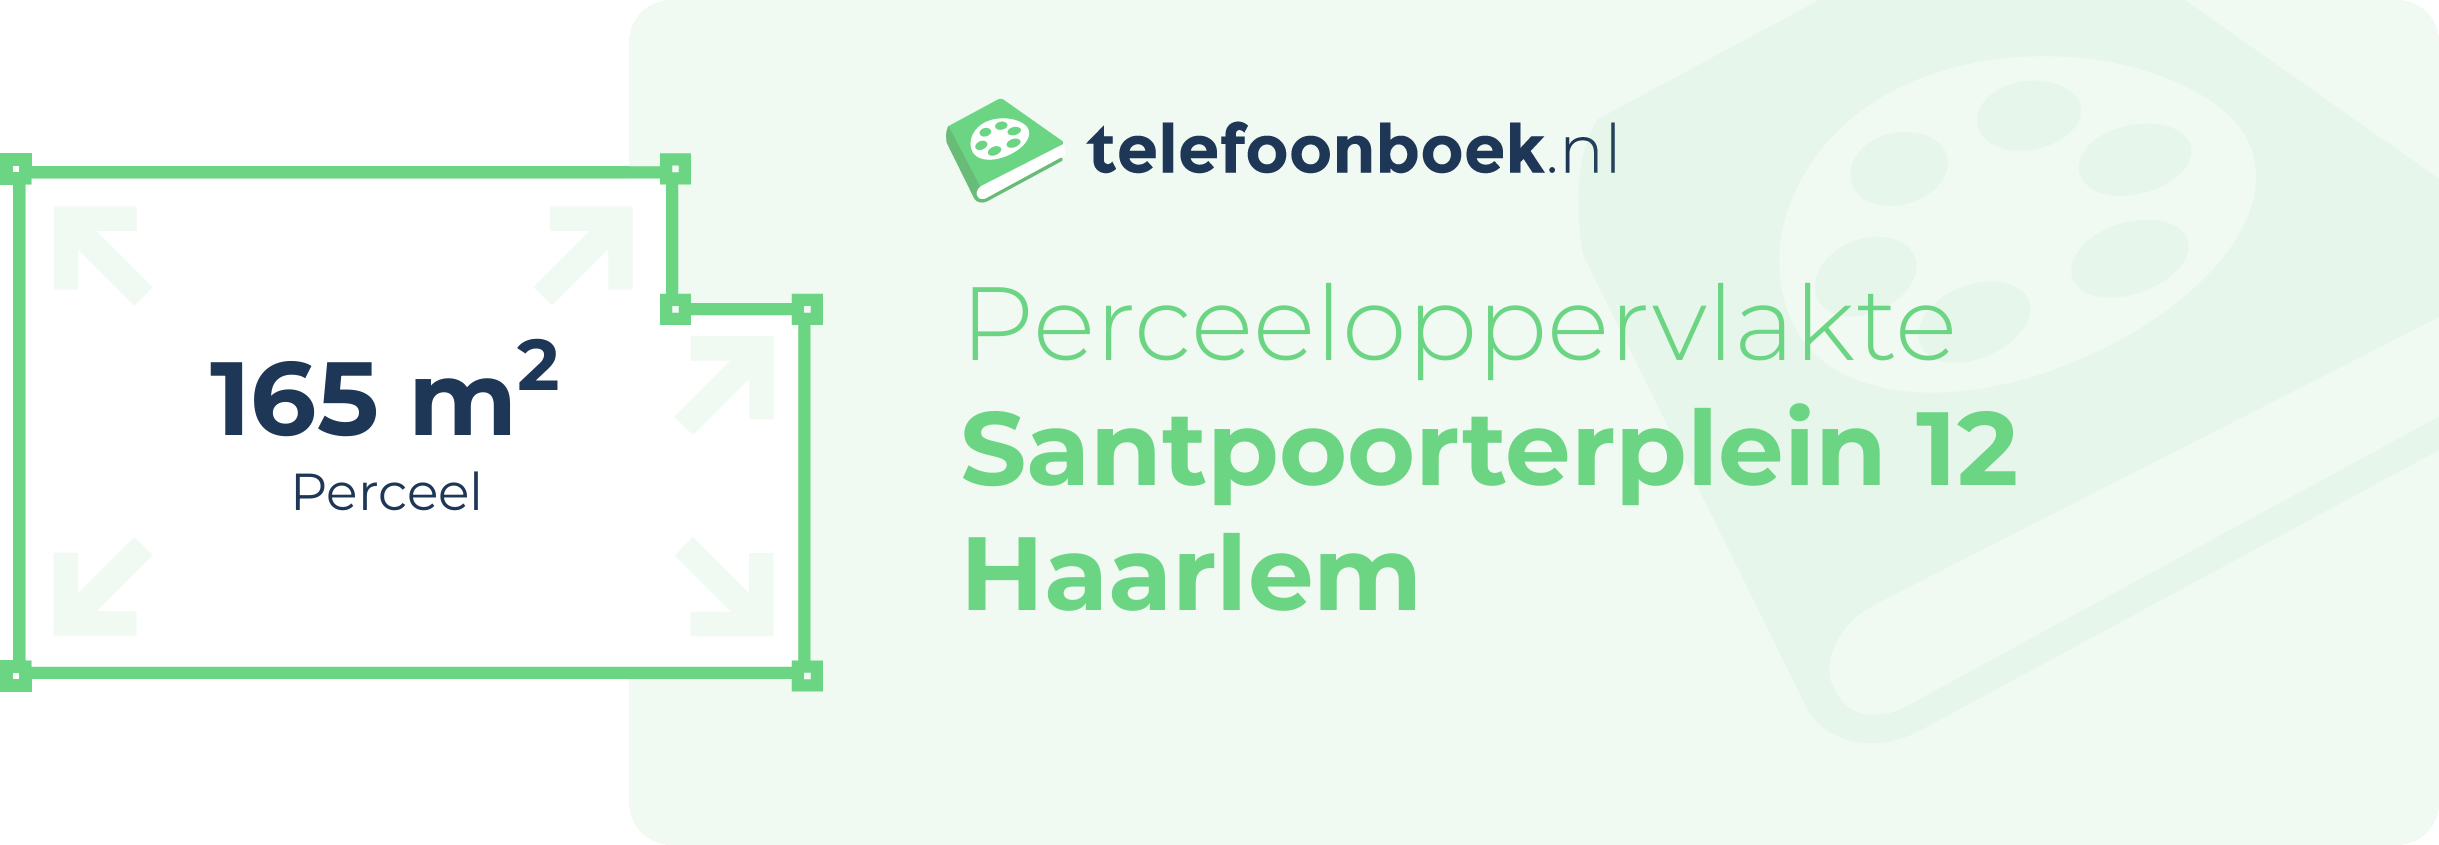 Perceeloppervlakte Santpoorterplein 12 Haarlem